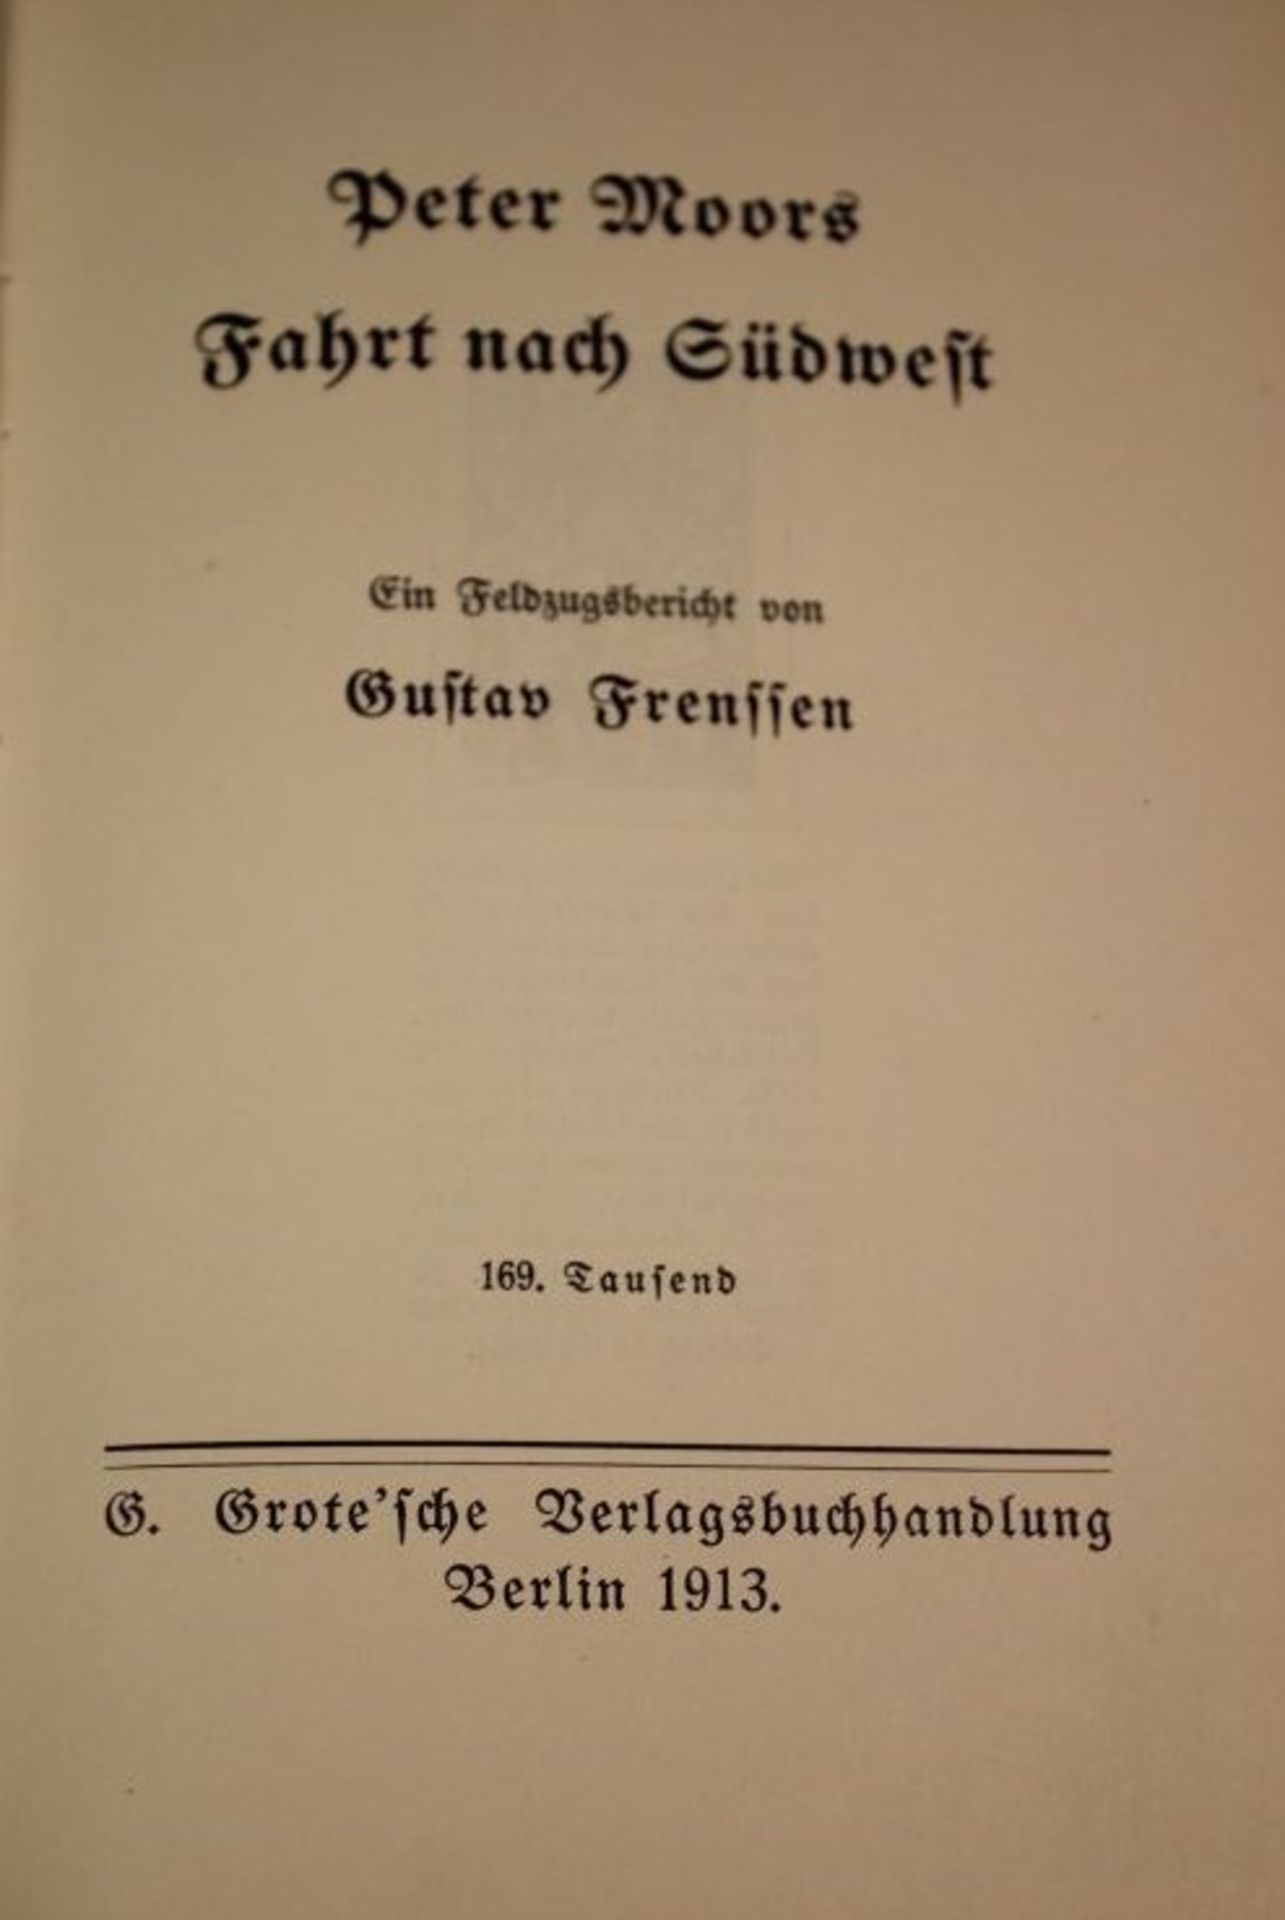 Gustav Frenssen, Peter Moors Fahrt nach Südwest, Berlin 1913 - Image 2 of 2